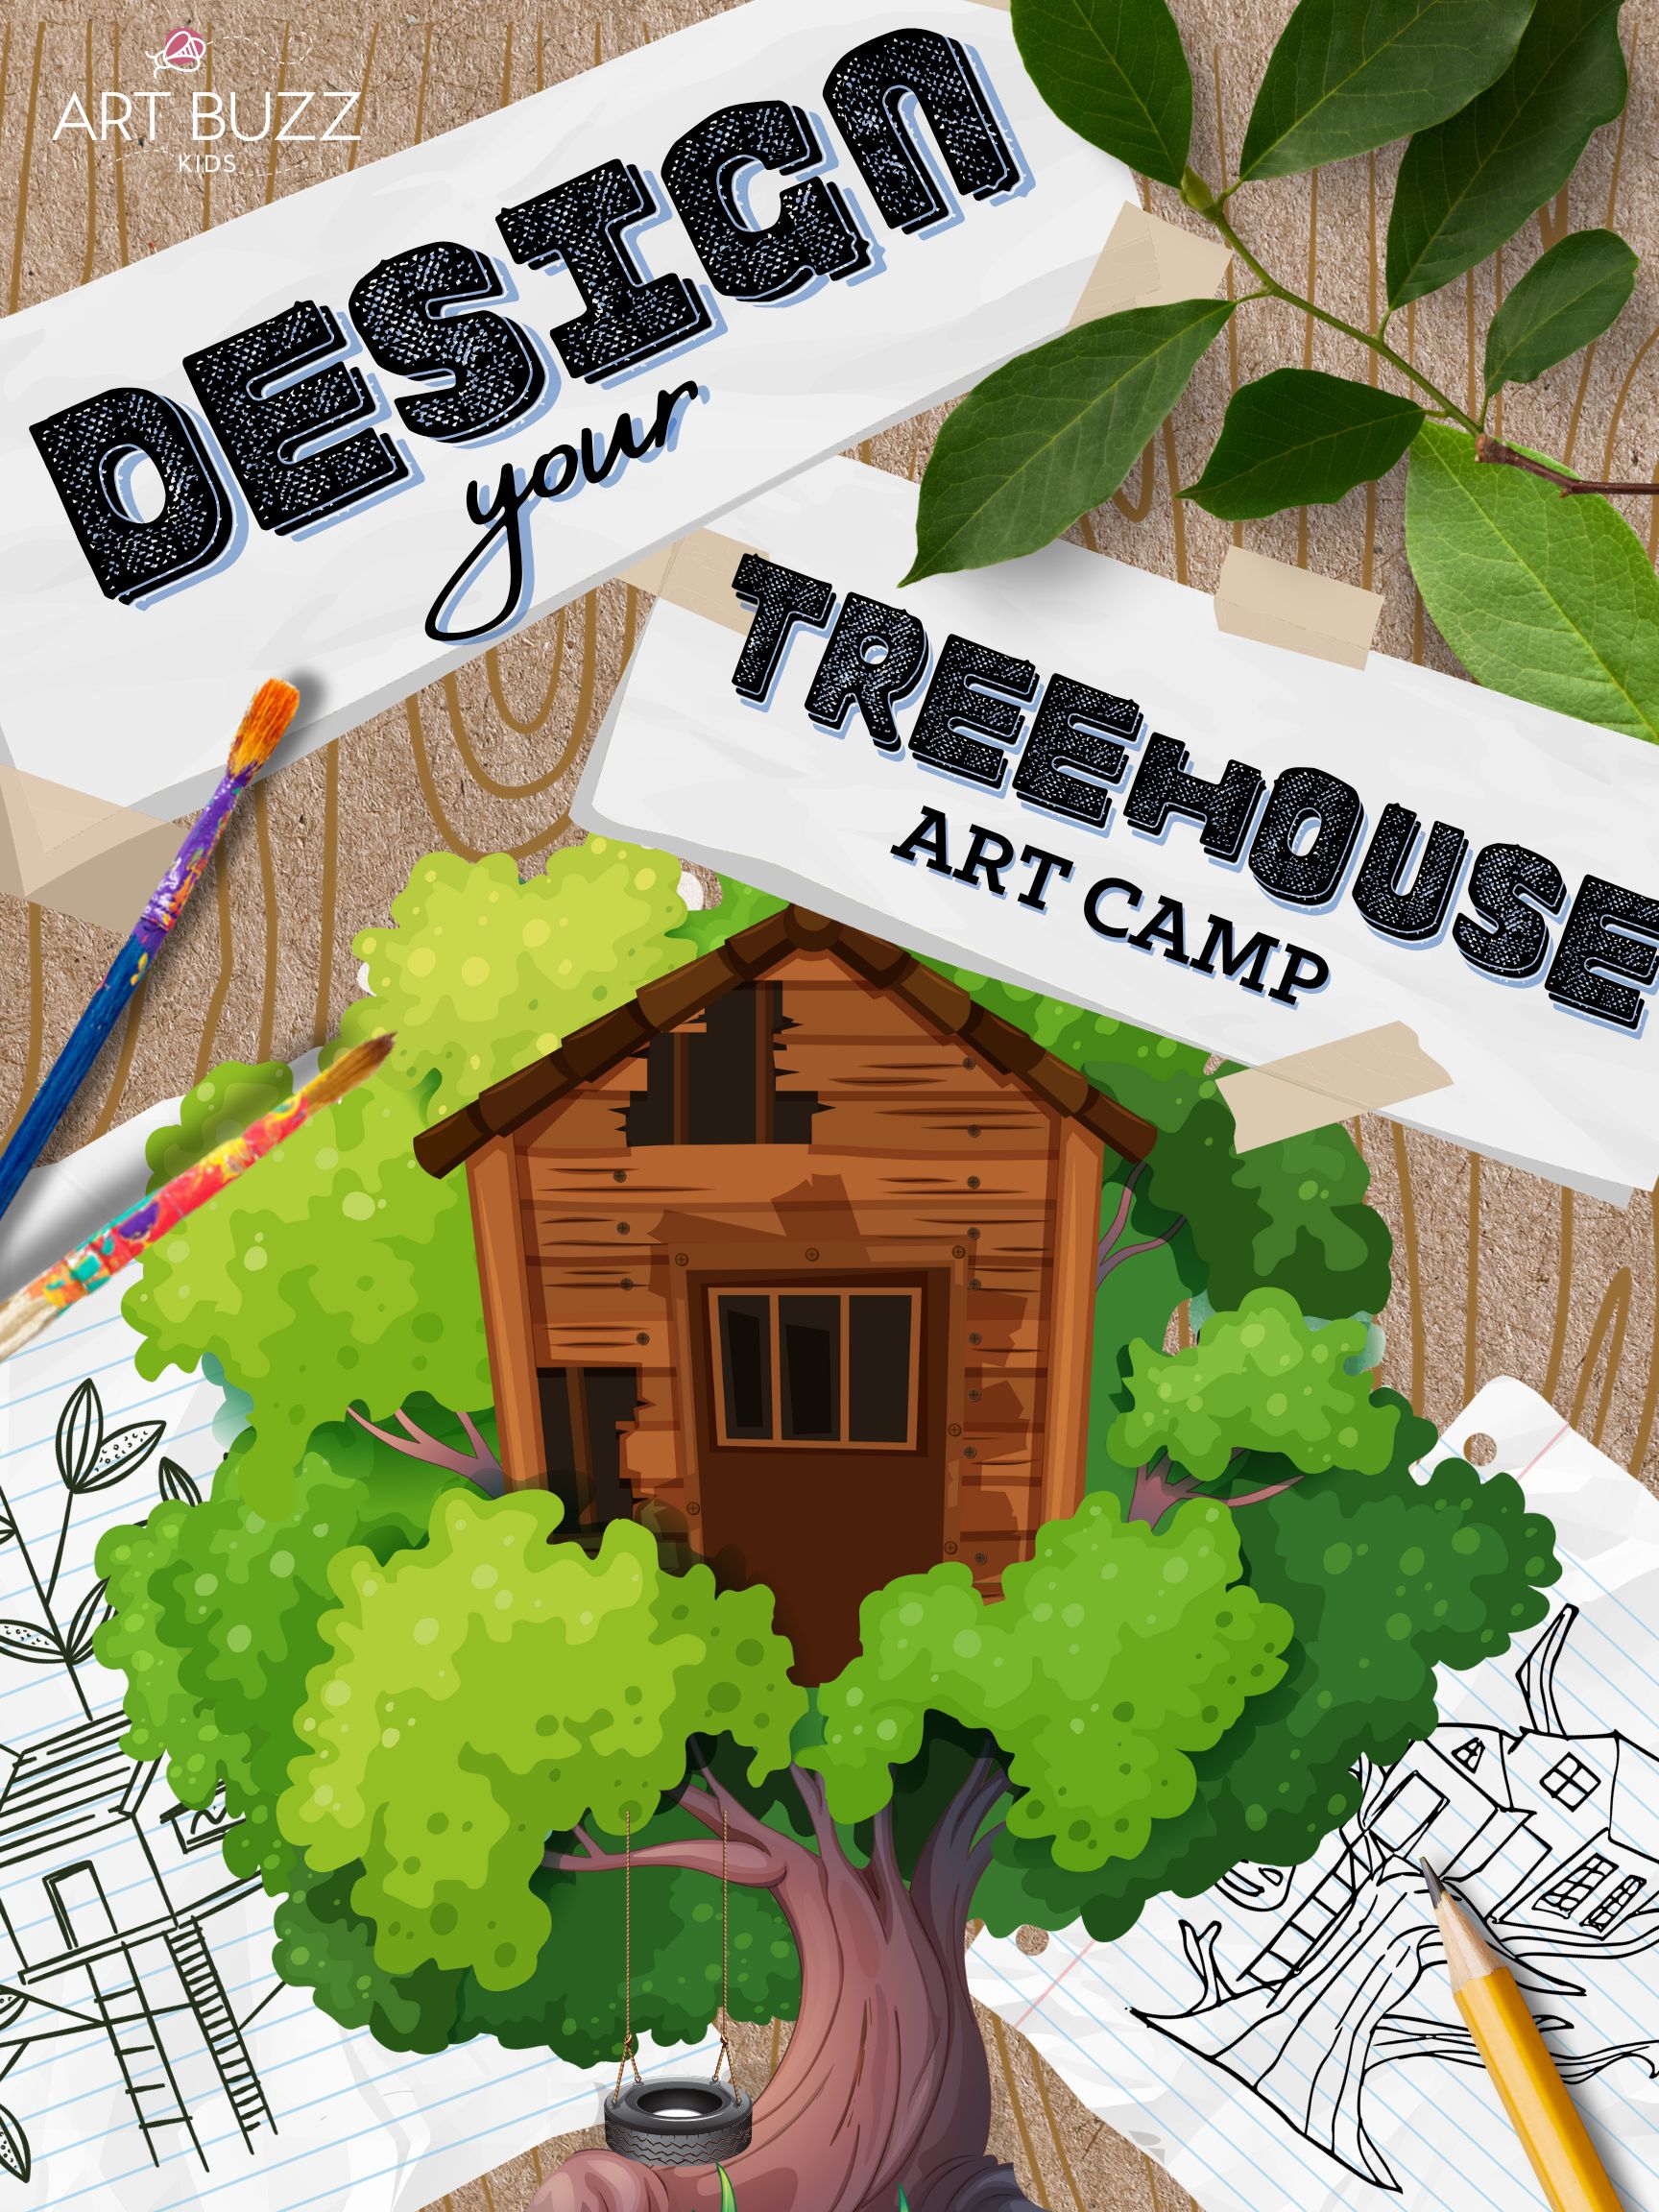 BRAND NEW: "Design Your Treehouse" Art Buzz Kids Art Camp! 9AM-4PM